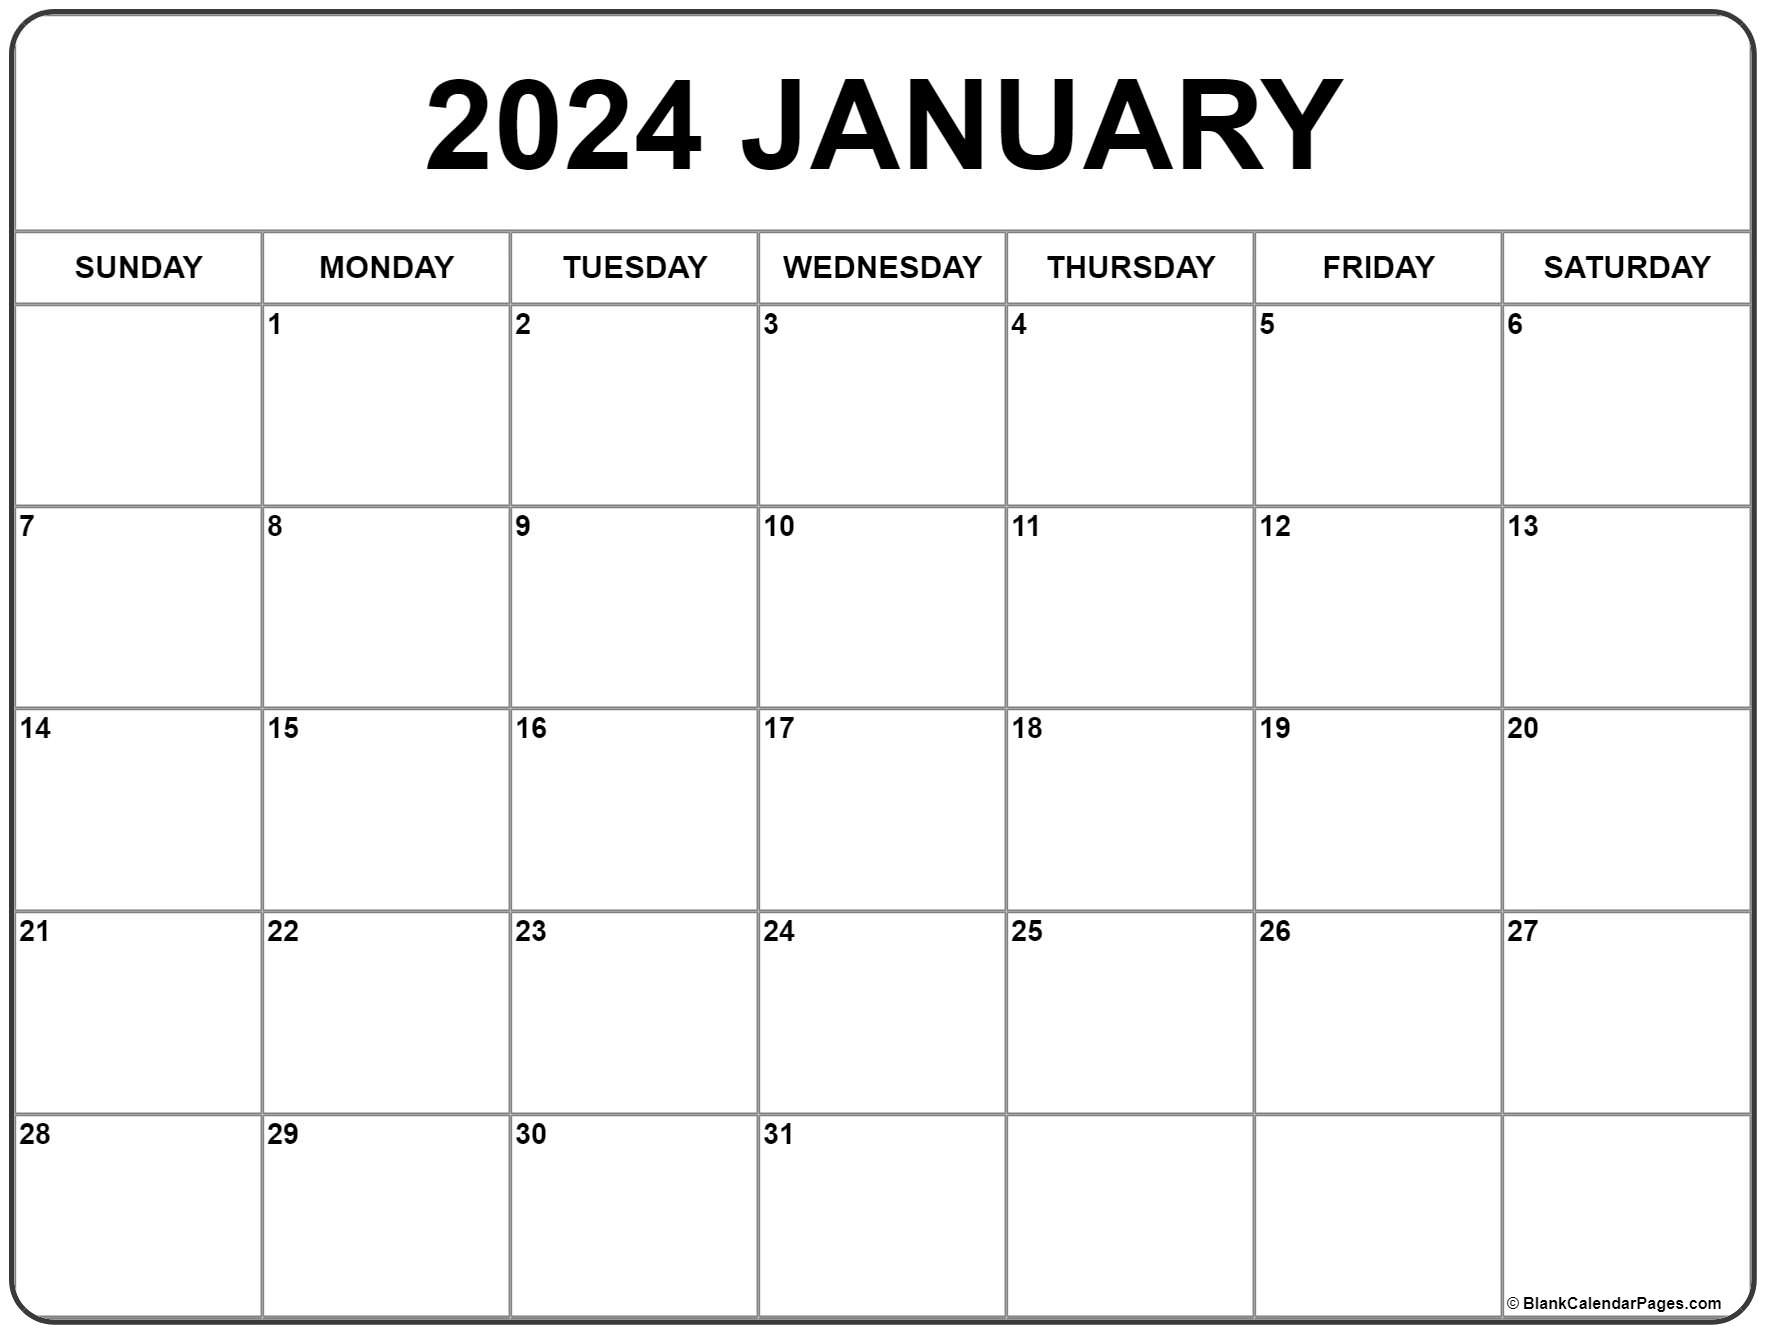 January 2024 Calendar | Free Printable Calendar for January 2024 Weekly Calendar Printable